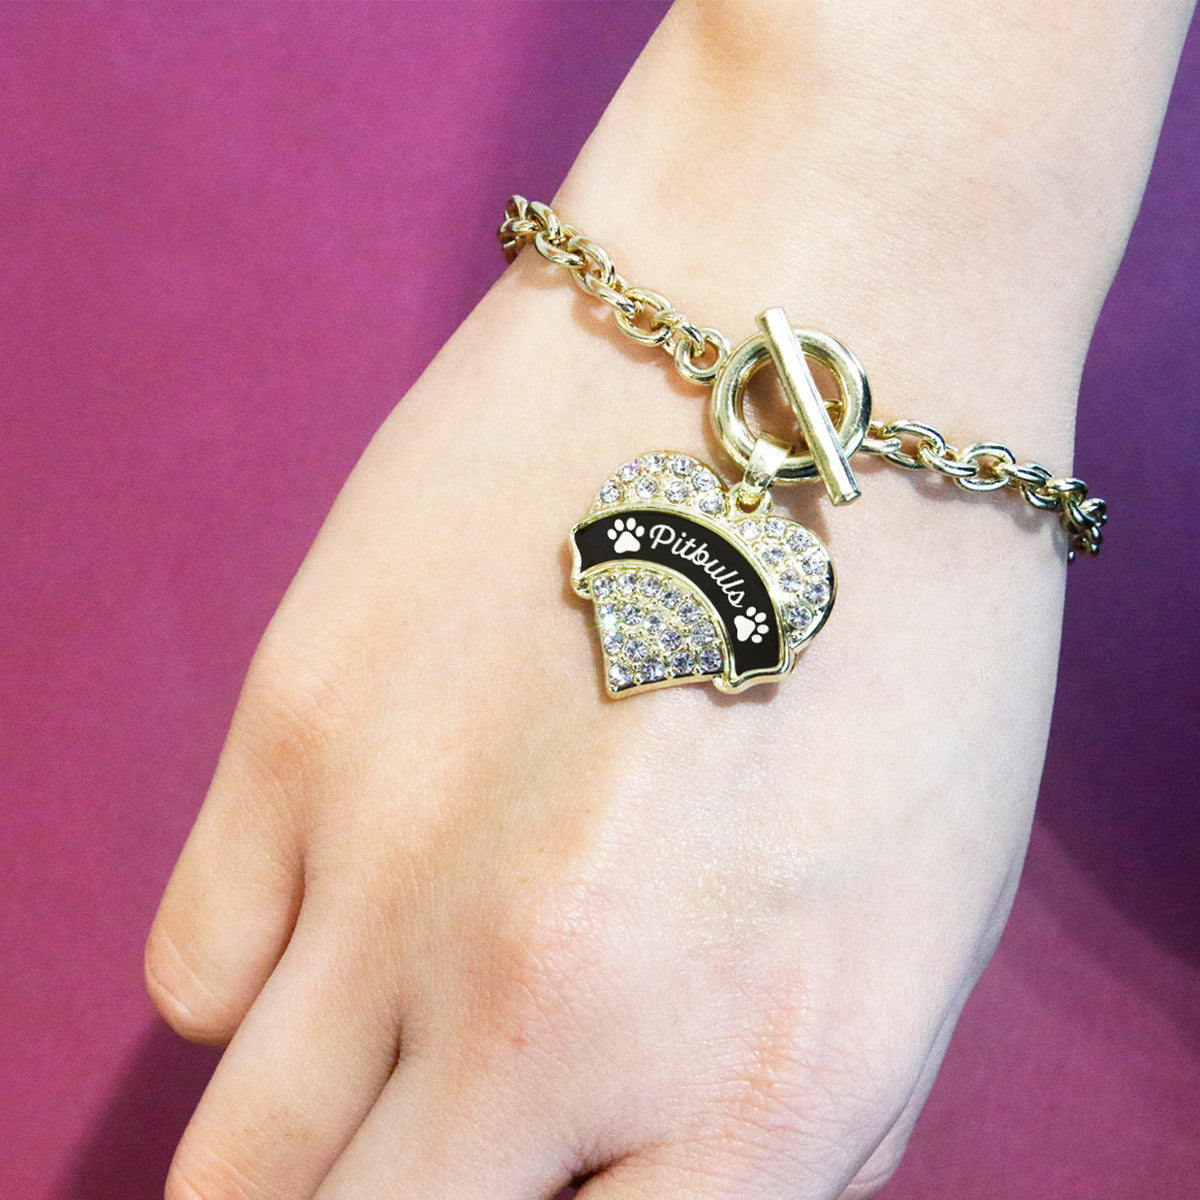 Gold Pitbulls - Paw Prints Pave Heart Charm Toggle Bracelet